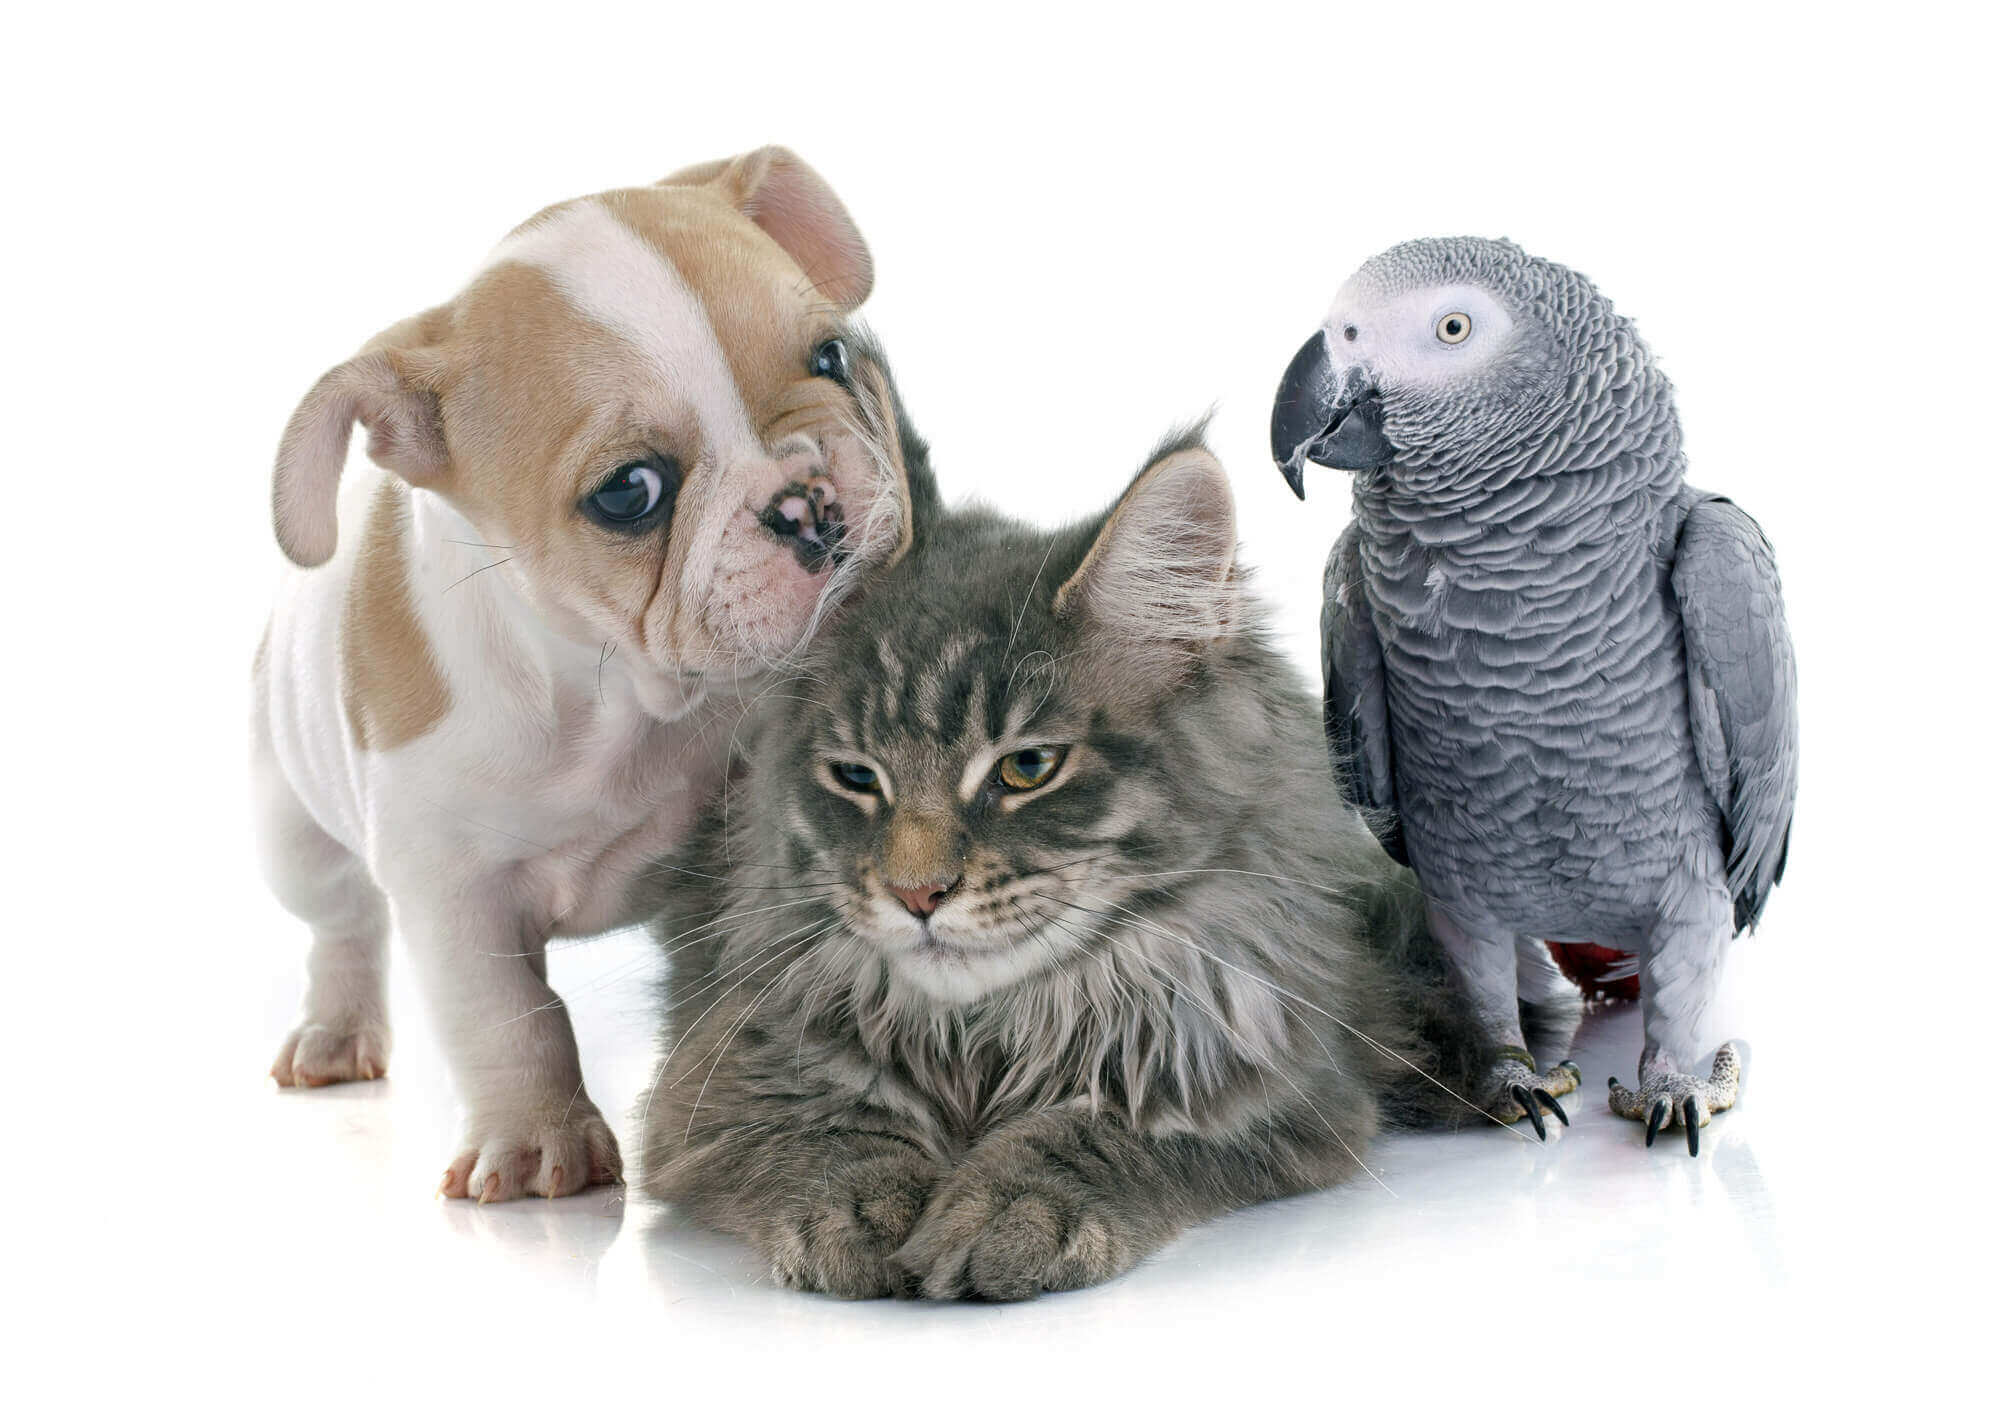 dog bird and cat clinic